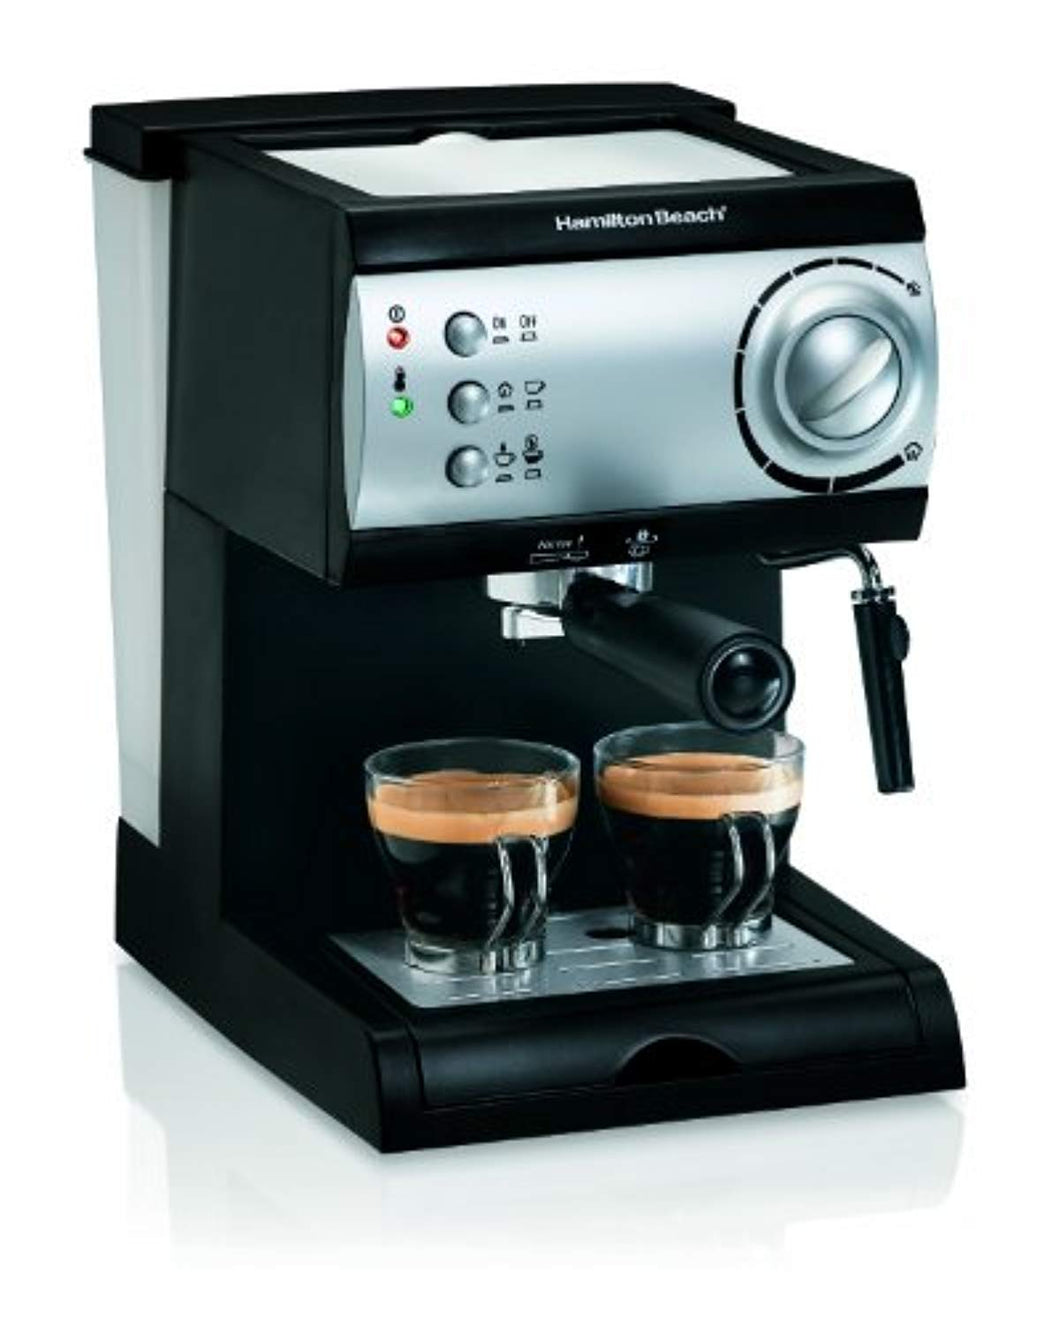 Espresso Machine with Steamer - Cappuccino, Mocha, & Latte Maker - EK CHIC HOME